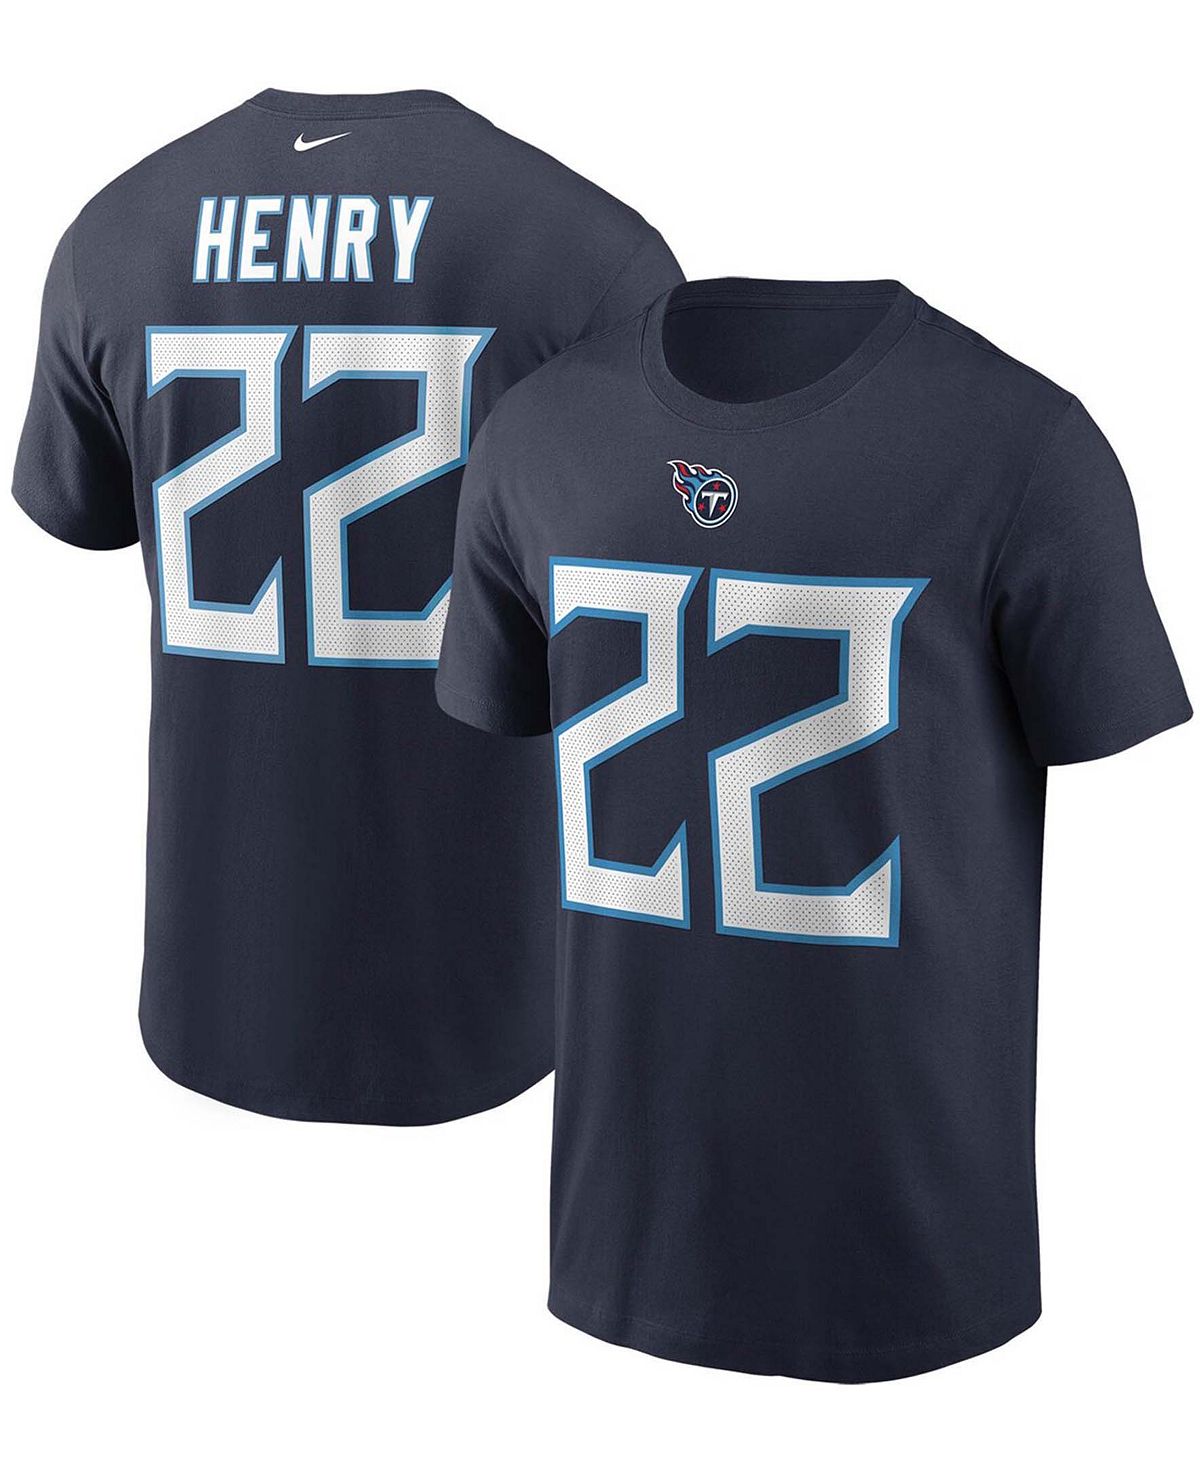 Мужская футболка Derrick Henry Navy Tennessee Titans с именем и номером Nike